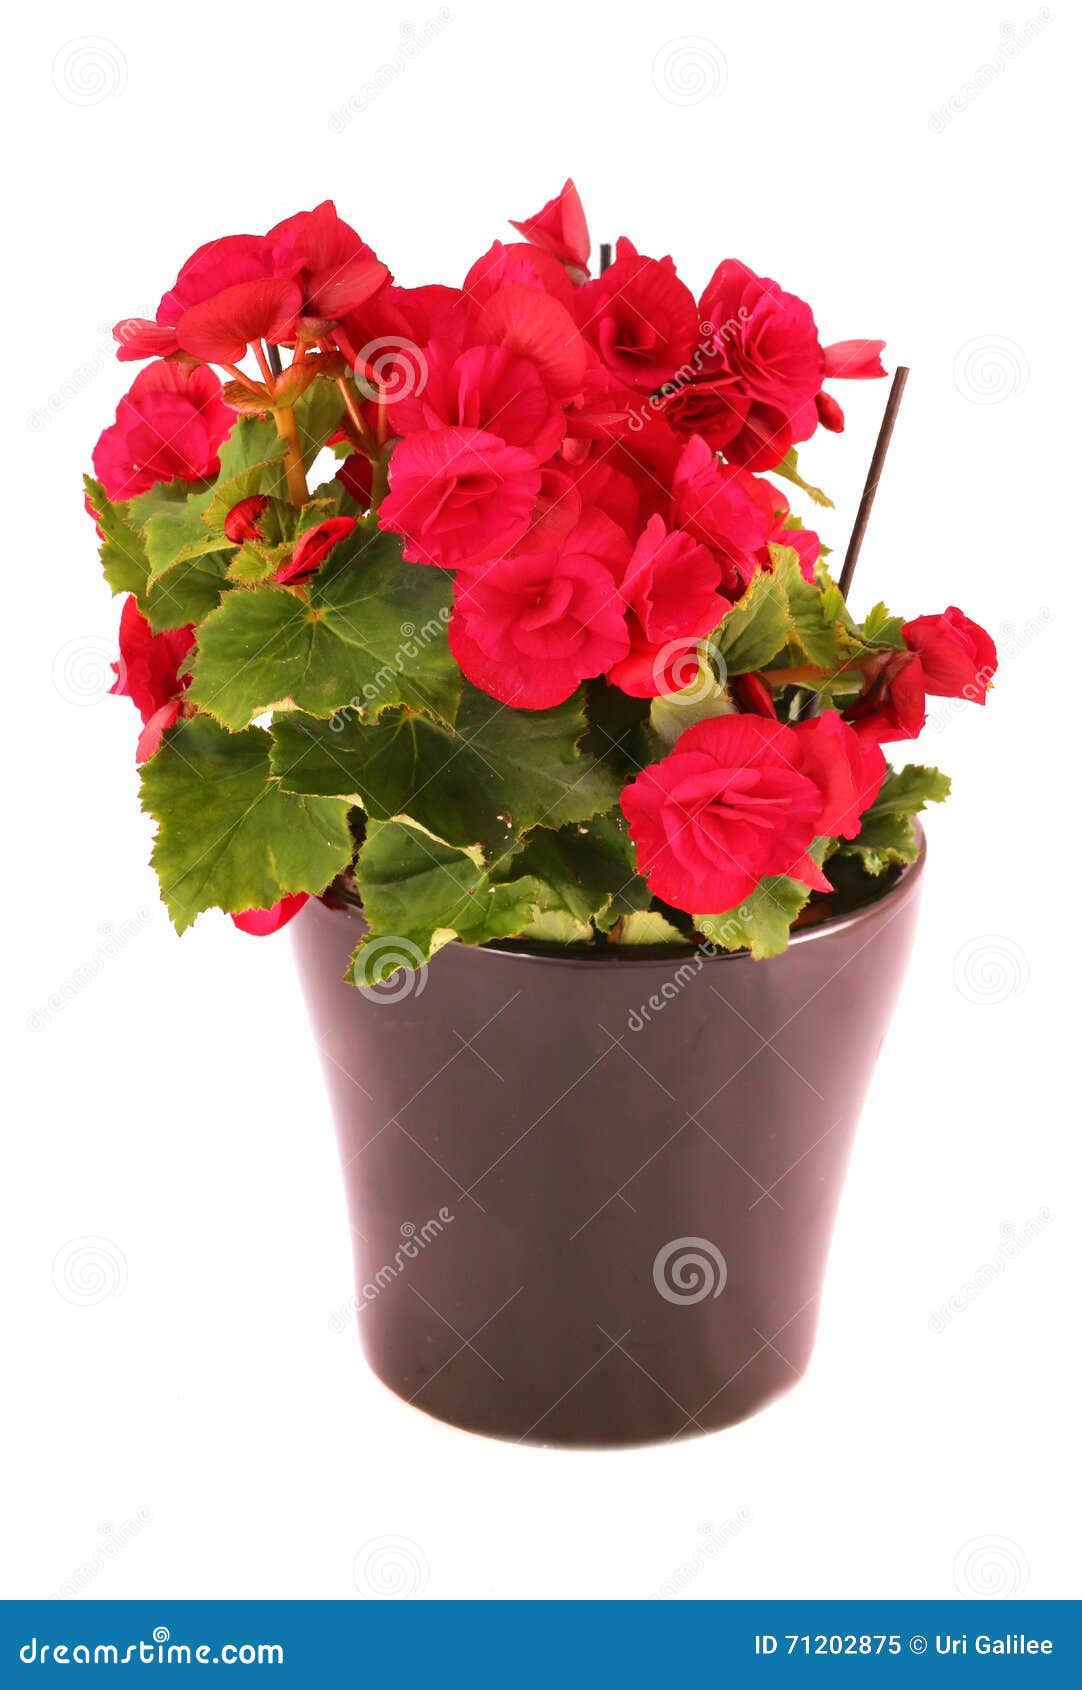 Red Elatior Begonia Flowers Stock Image - Image of ceramic, grow: 71202875